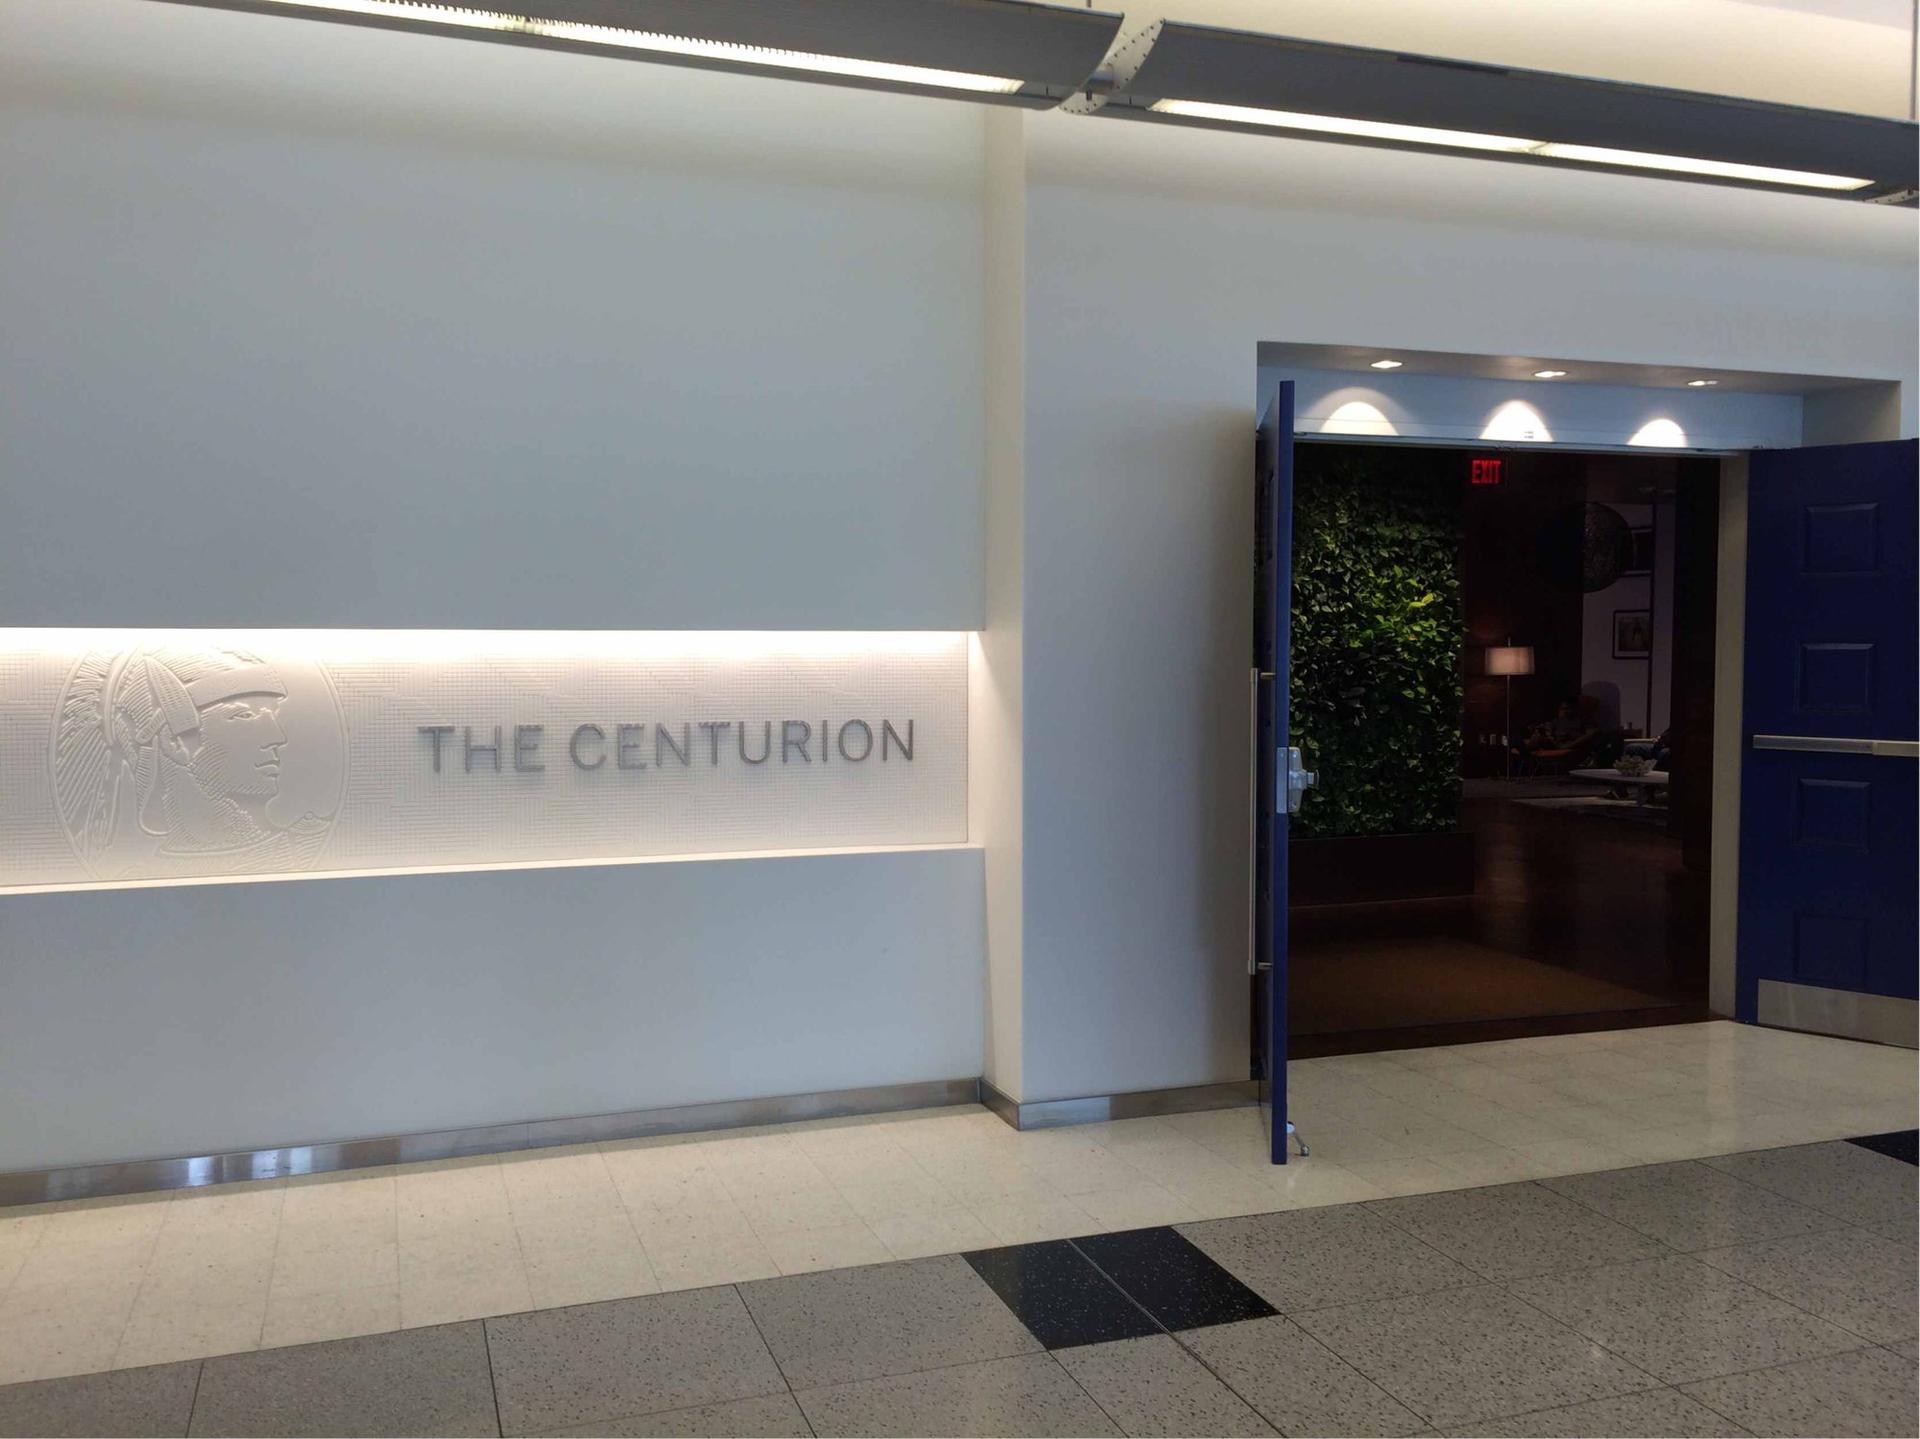 The Centurion Lounge image 60 of 100